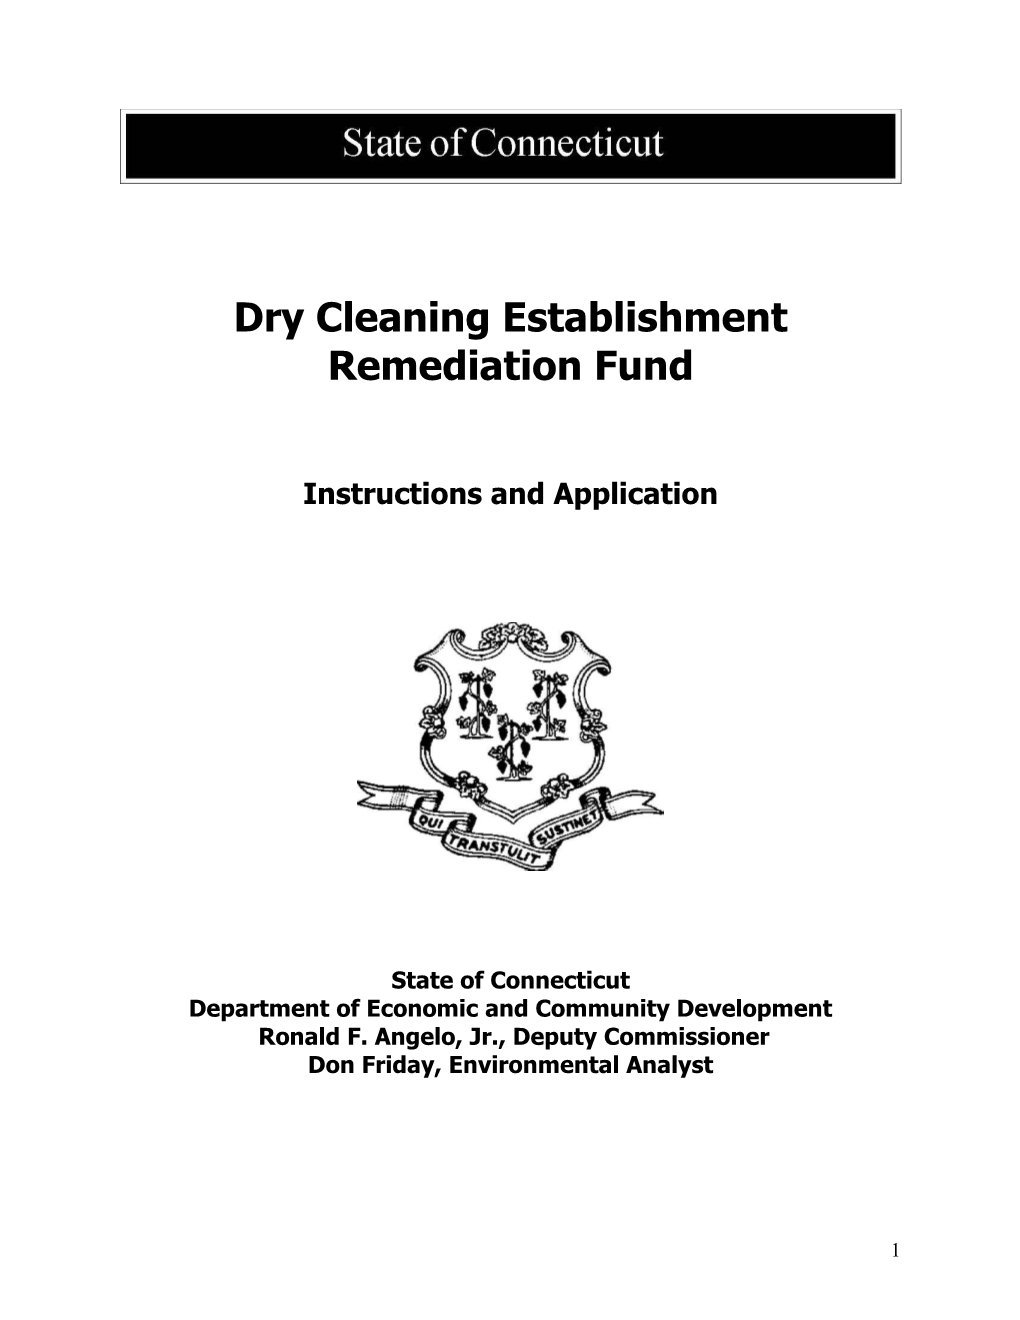 Dry Cleaning Establishment Remediation Fund